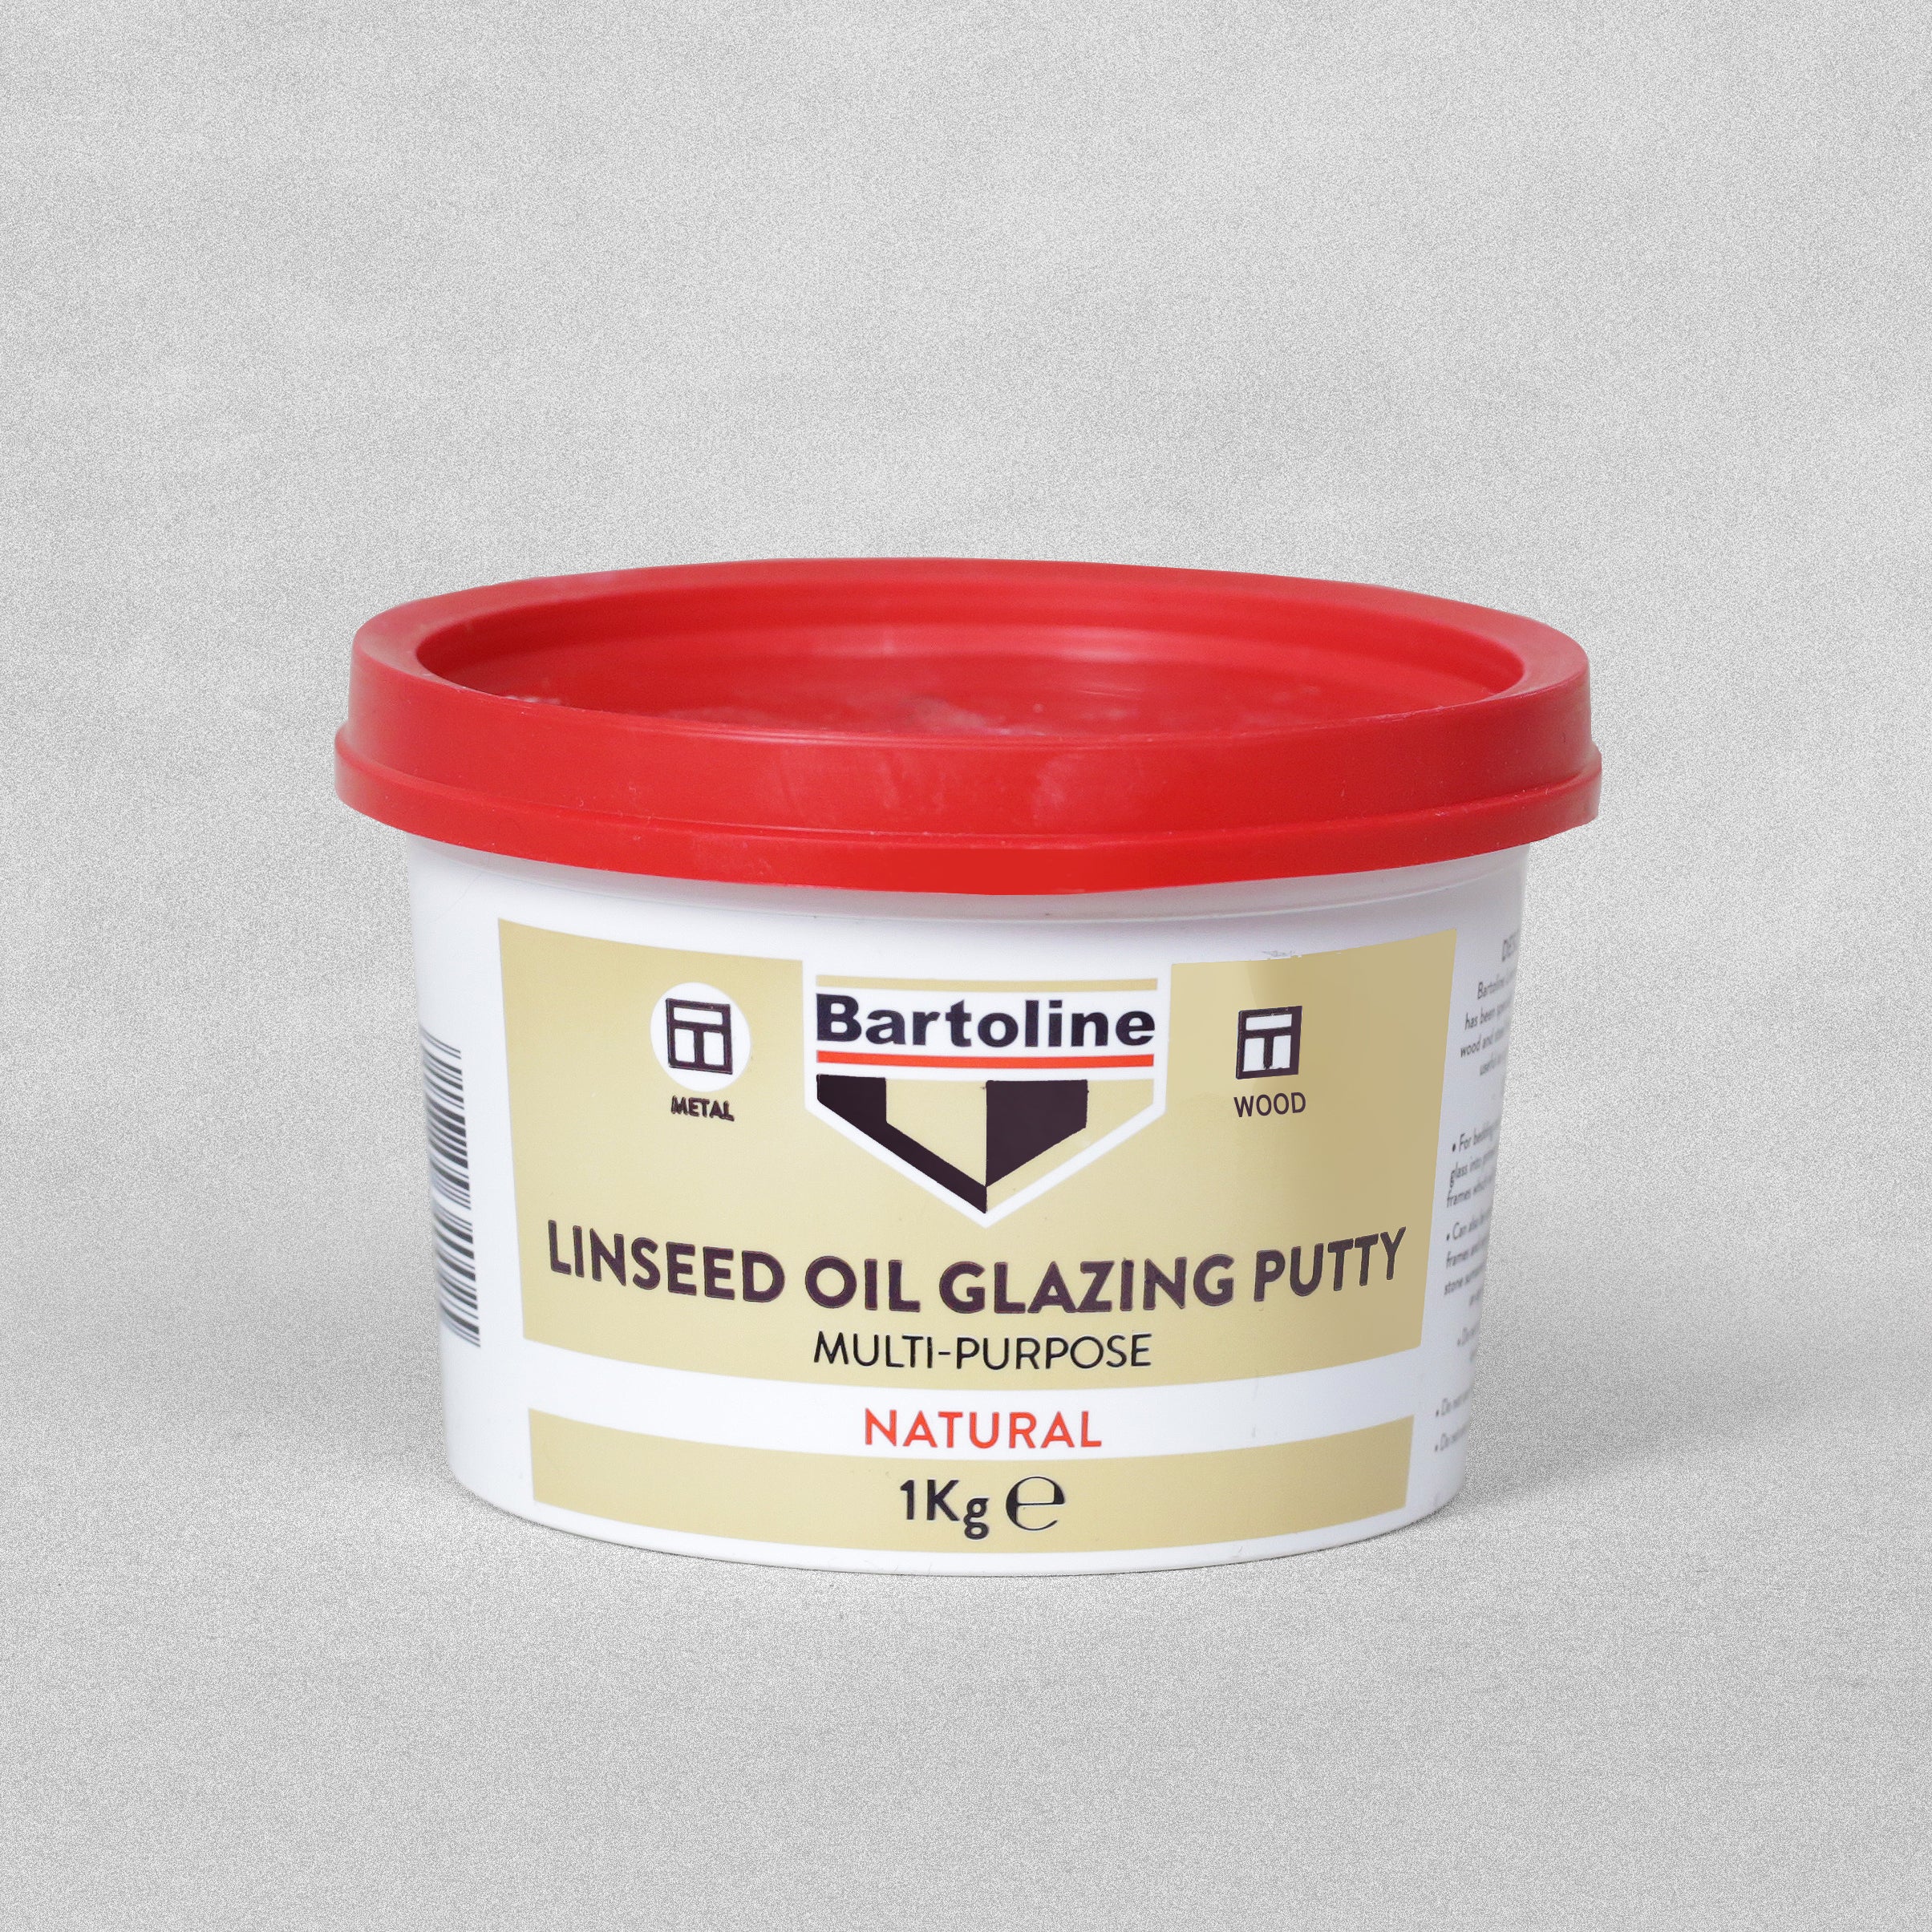 Bartoline Multi-Purpose Natural Linseed Oil Glazing Putty - 1kg